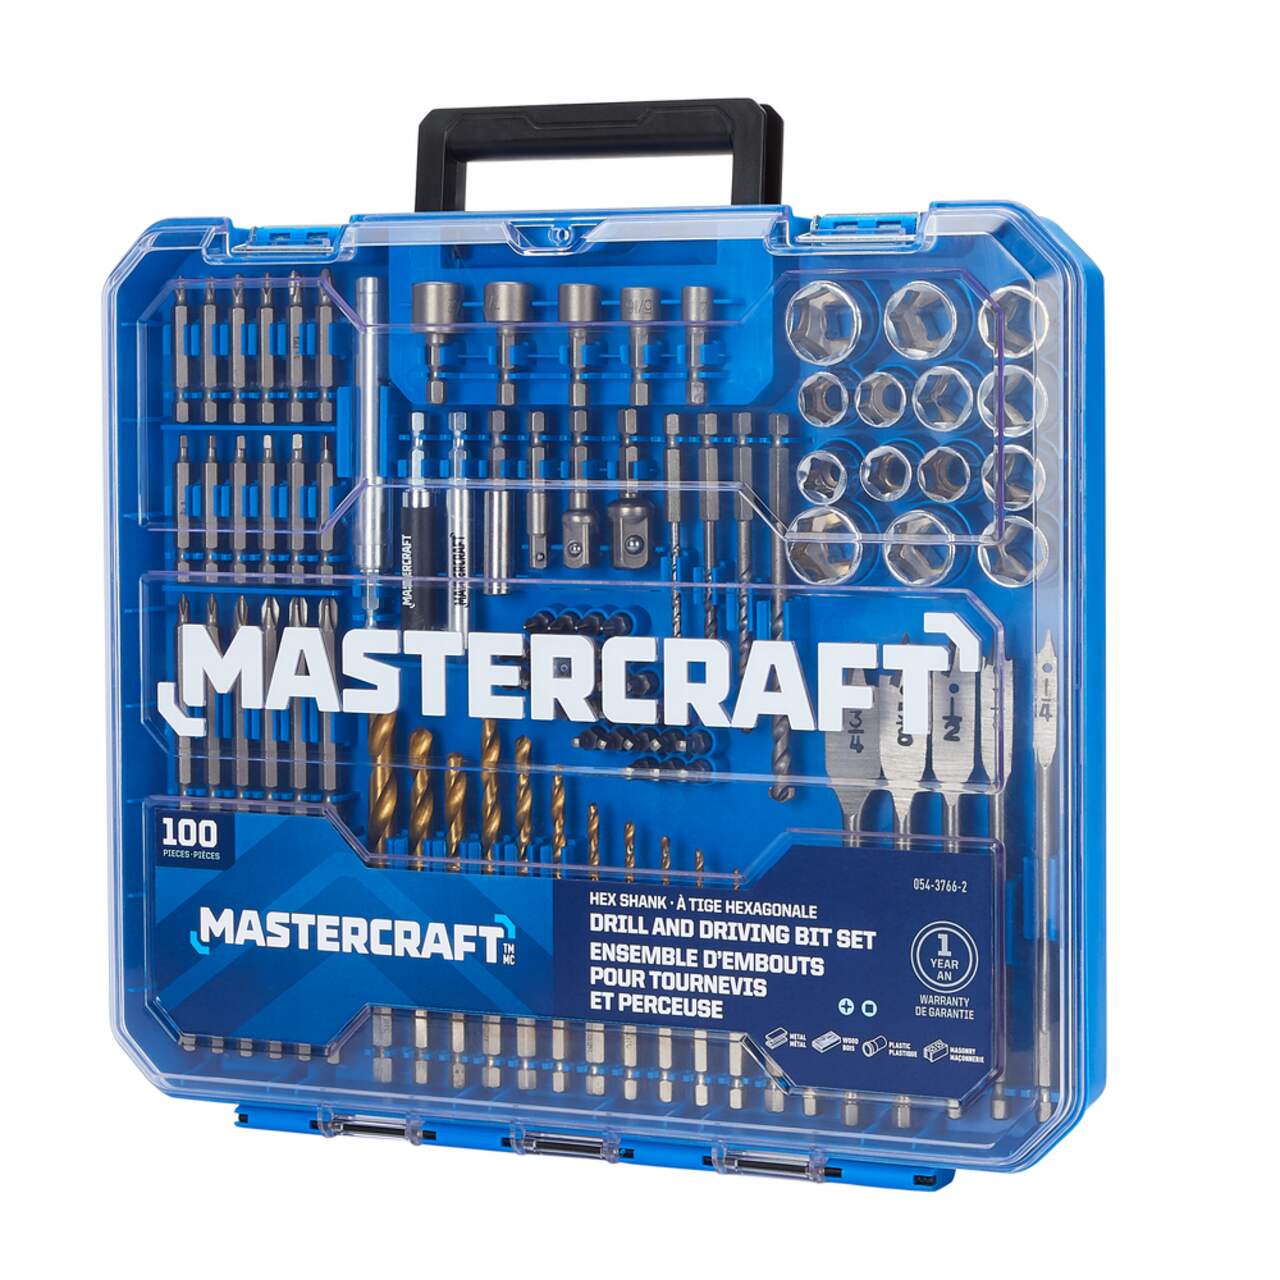 Mastercraft Hex Shank Drill & Drive Set for Wood, Metal, Plastic